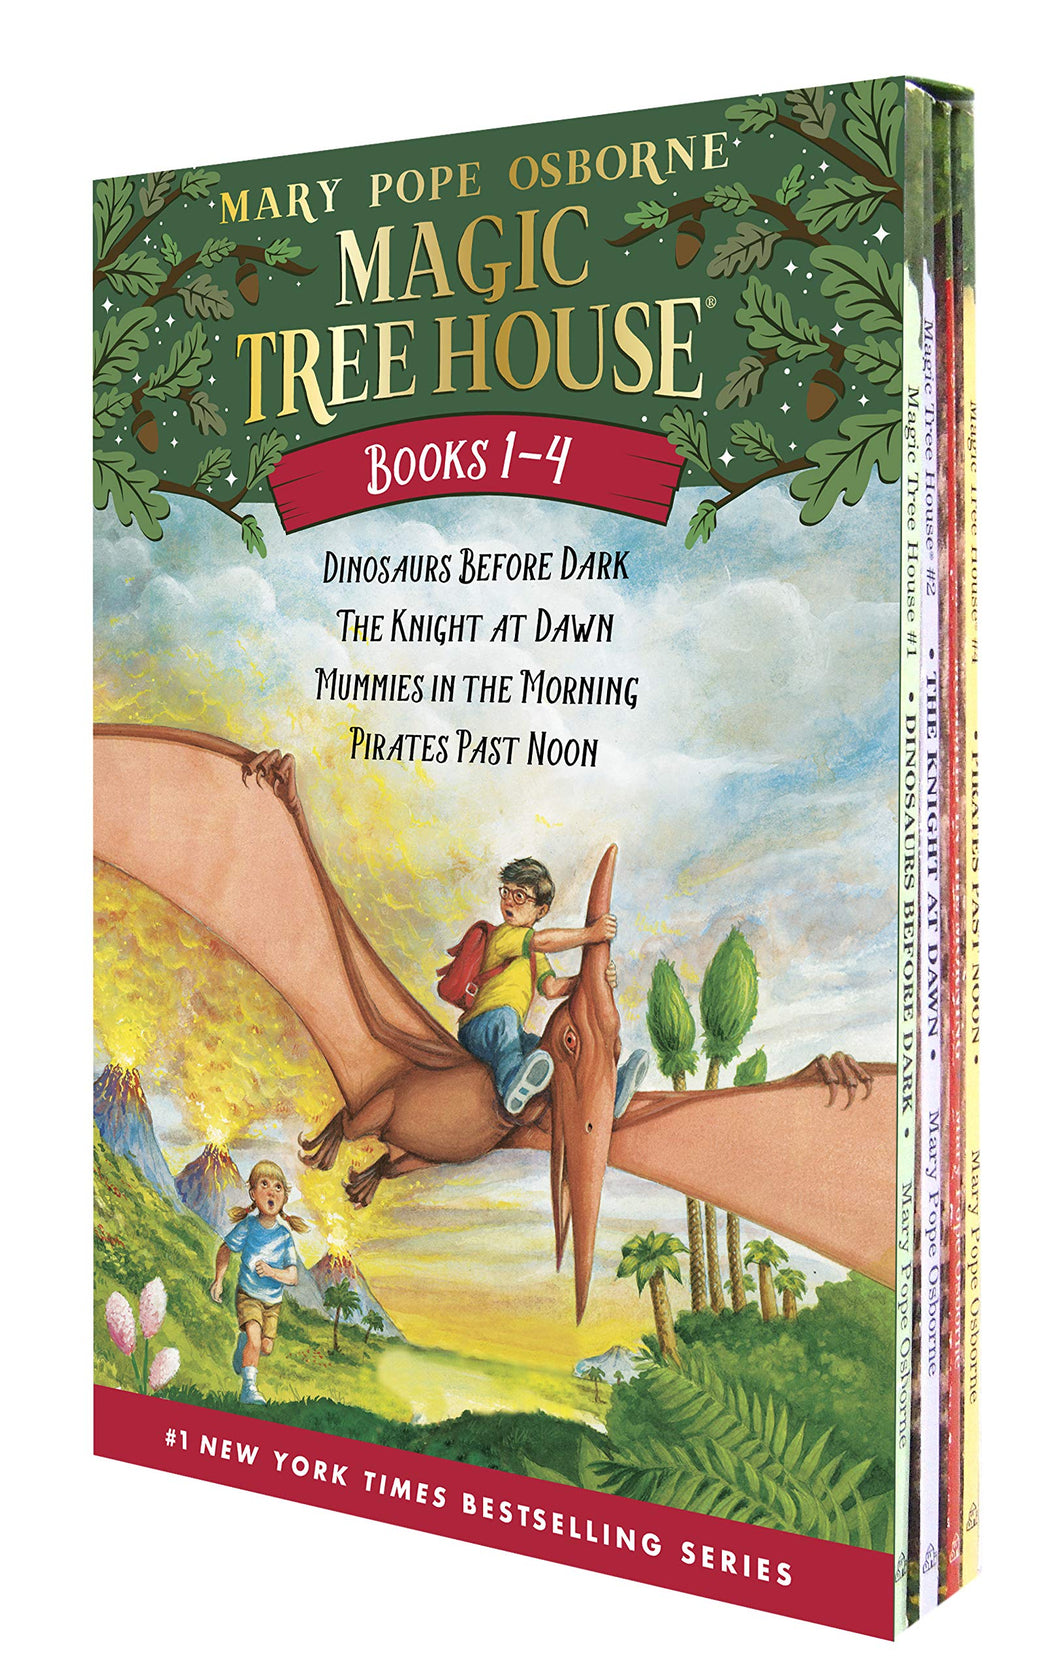 Magic Tree House Boxed Set (Books 1-4)